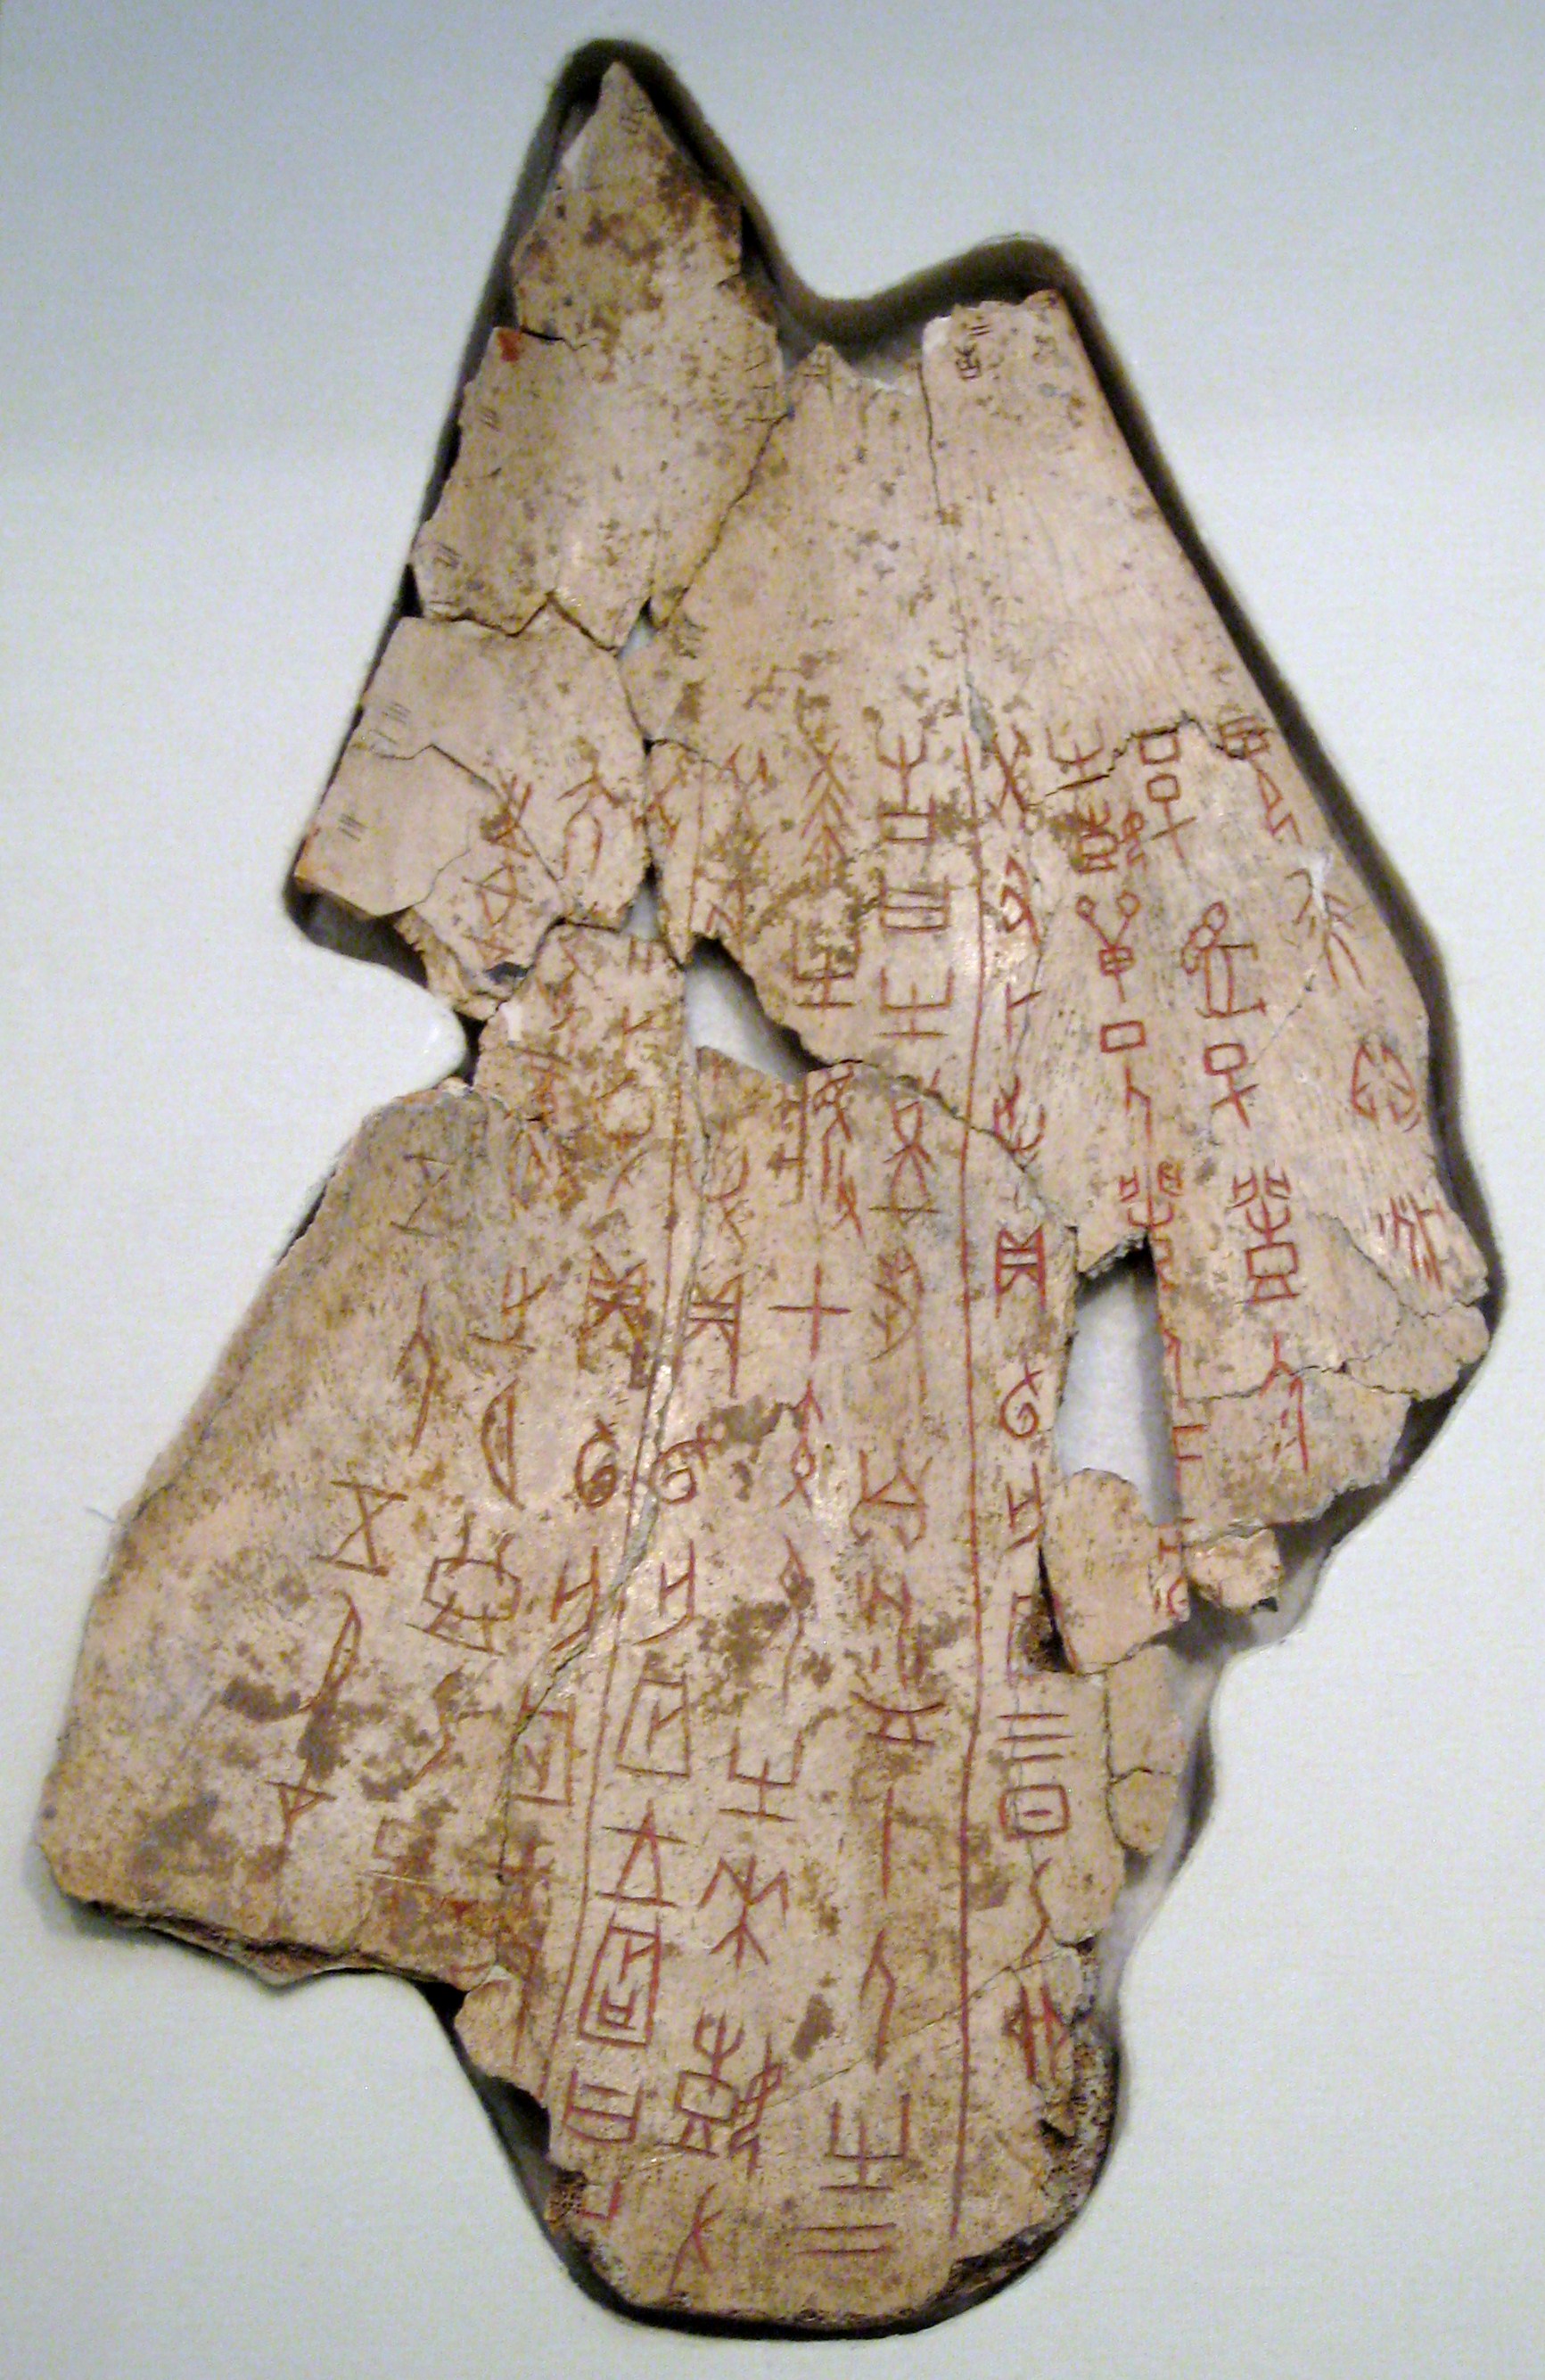 Shang dynasty inscribed scapula